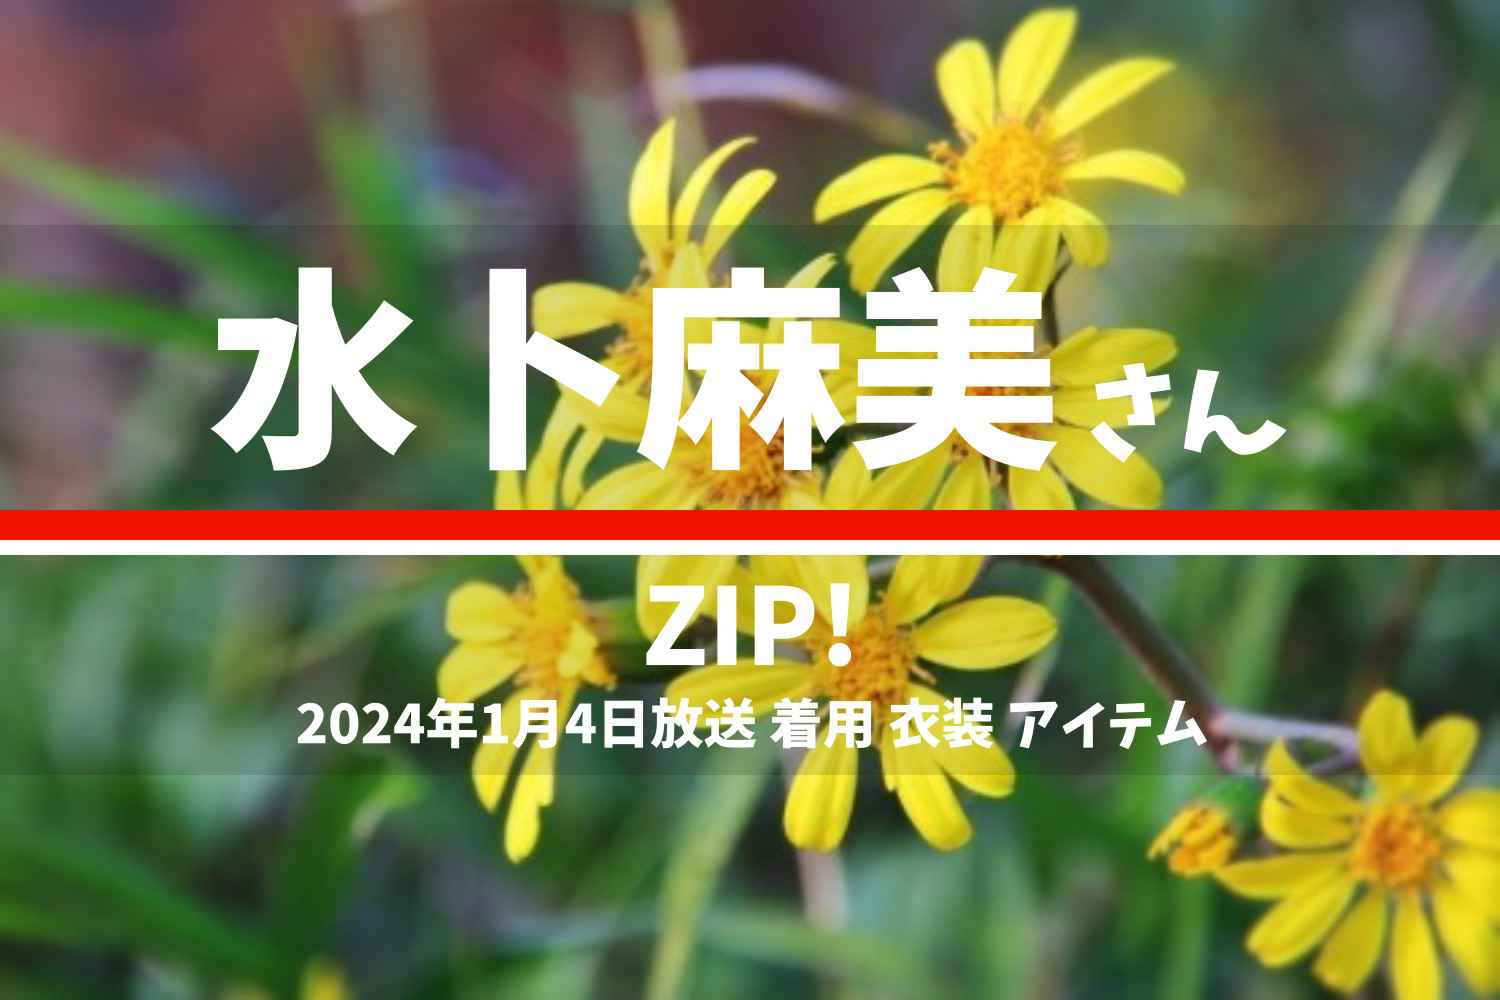 ZIP! 水卜麻美さん 番組 衣装 2024年1月4日放送